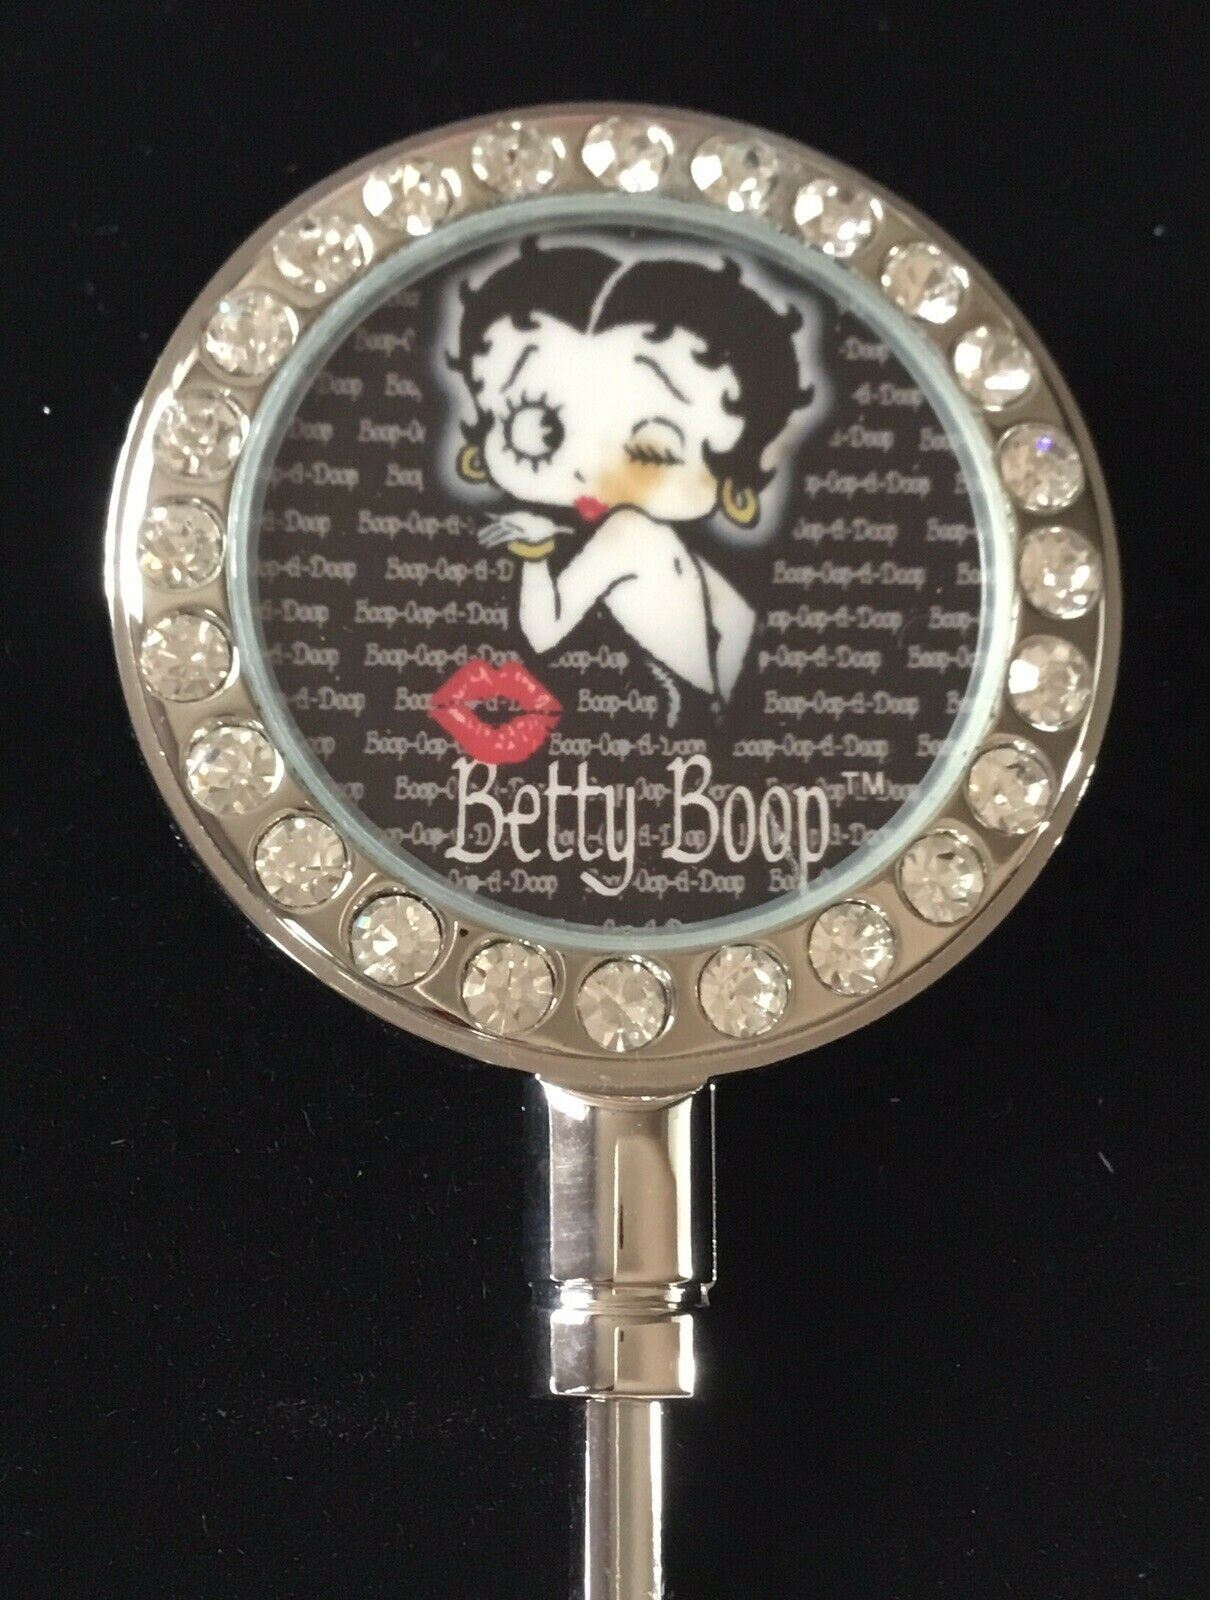 Betty Boop Memorabilia Bag, Purse & Bag Hanger